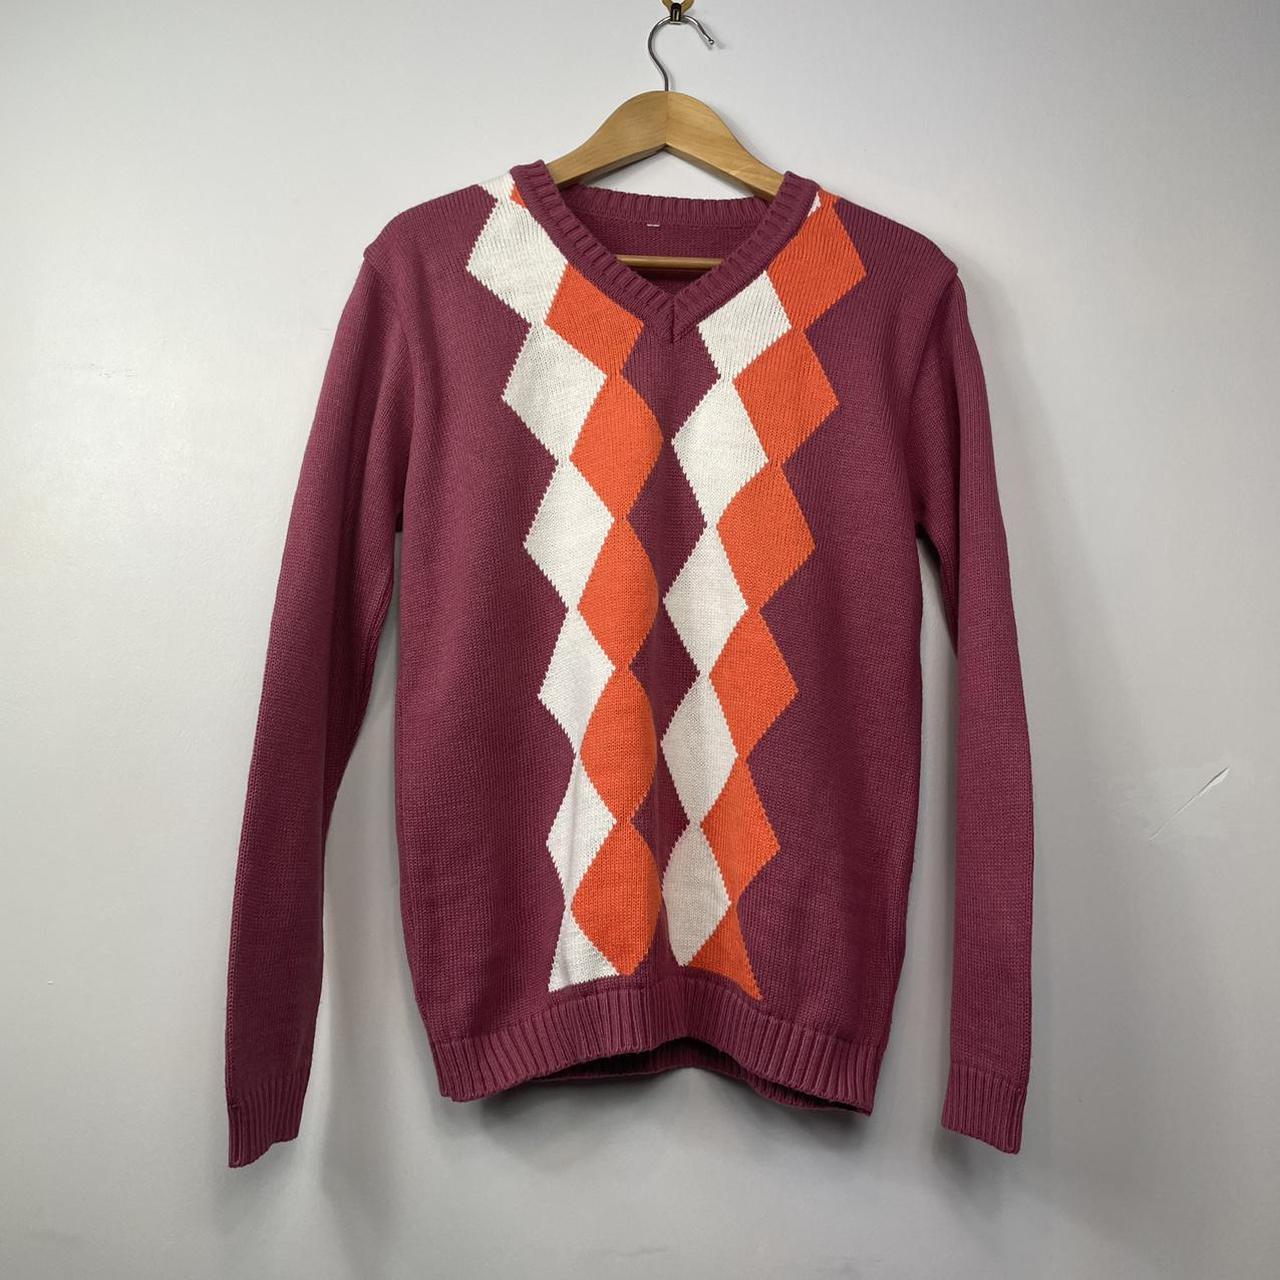 Product Image 1 - Vintage Y2K Argyle Multicoloured Jumper/Knitwear

-